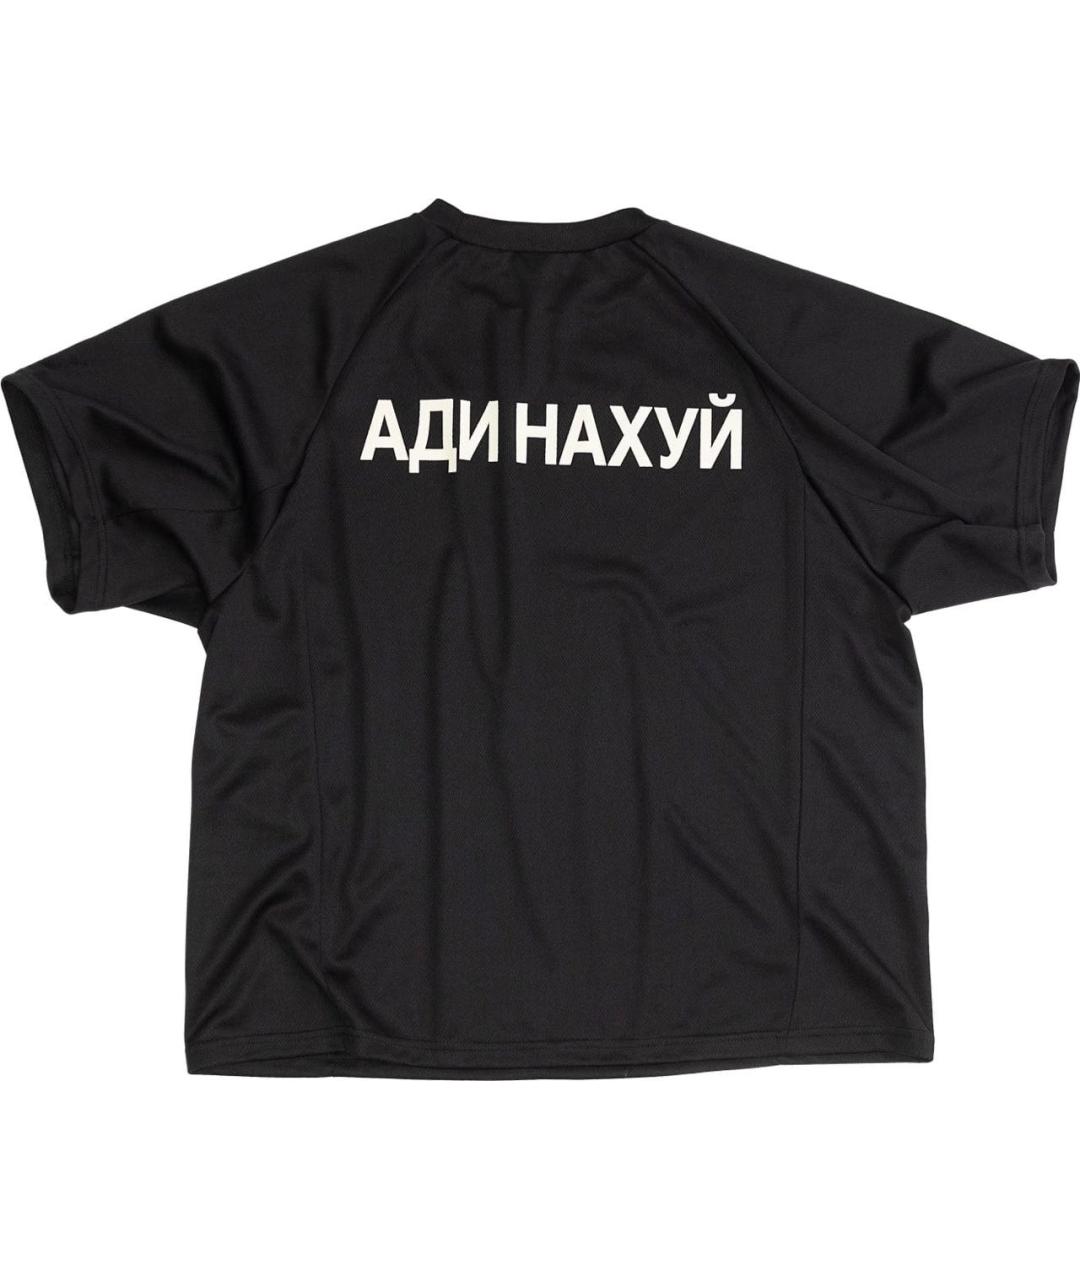 YEEZY Черная синтетическая футболка, фото 2